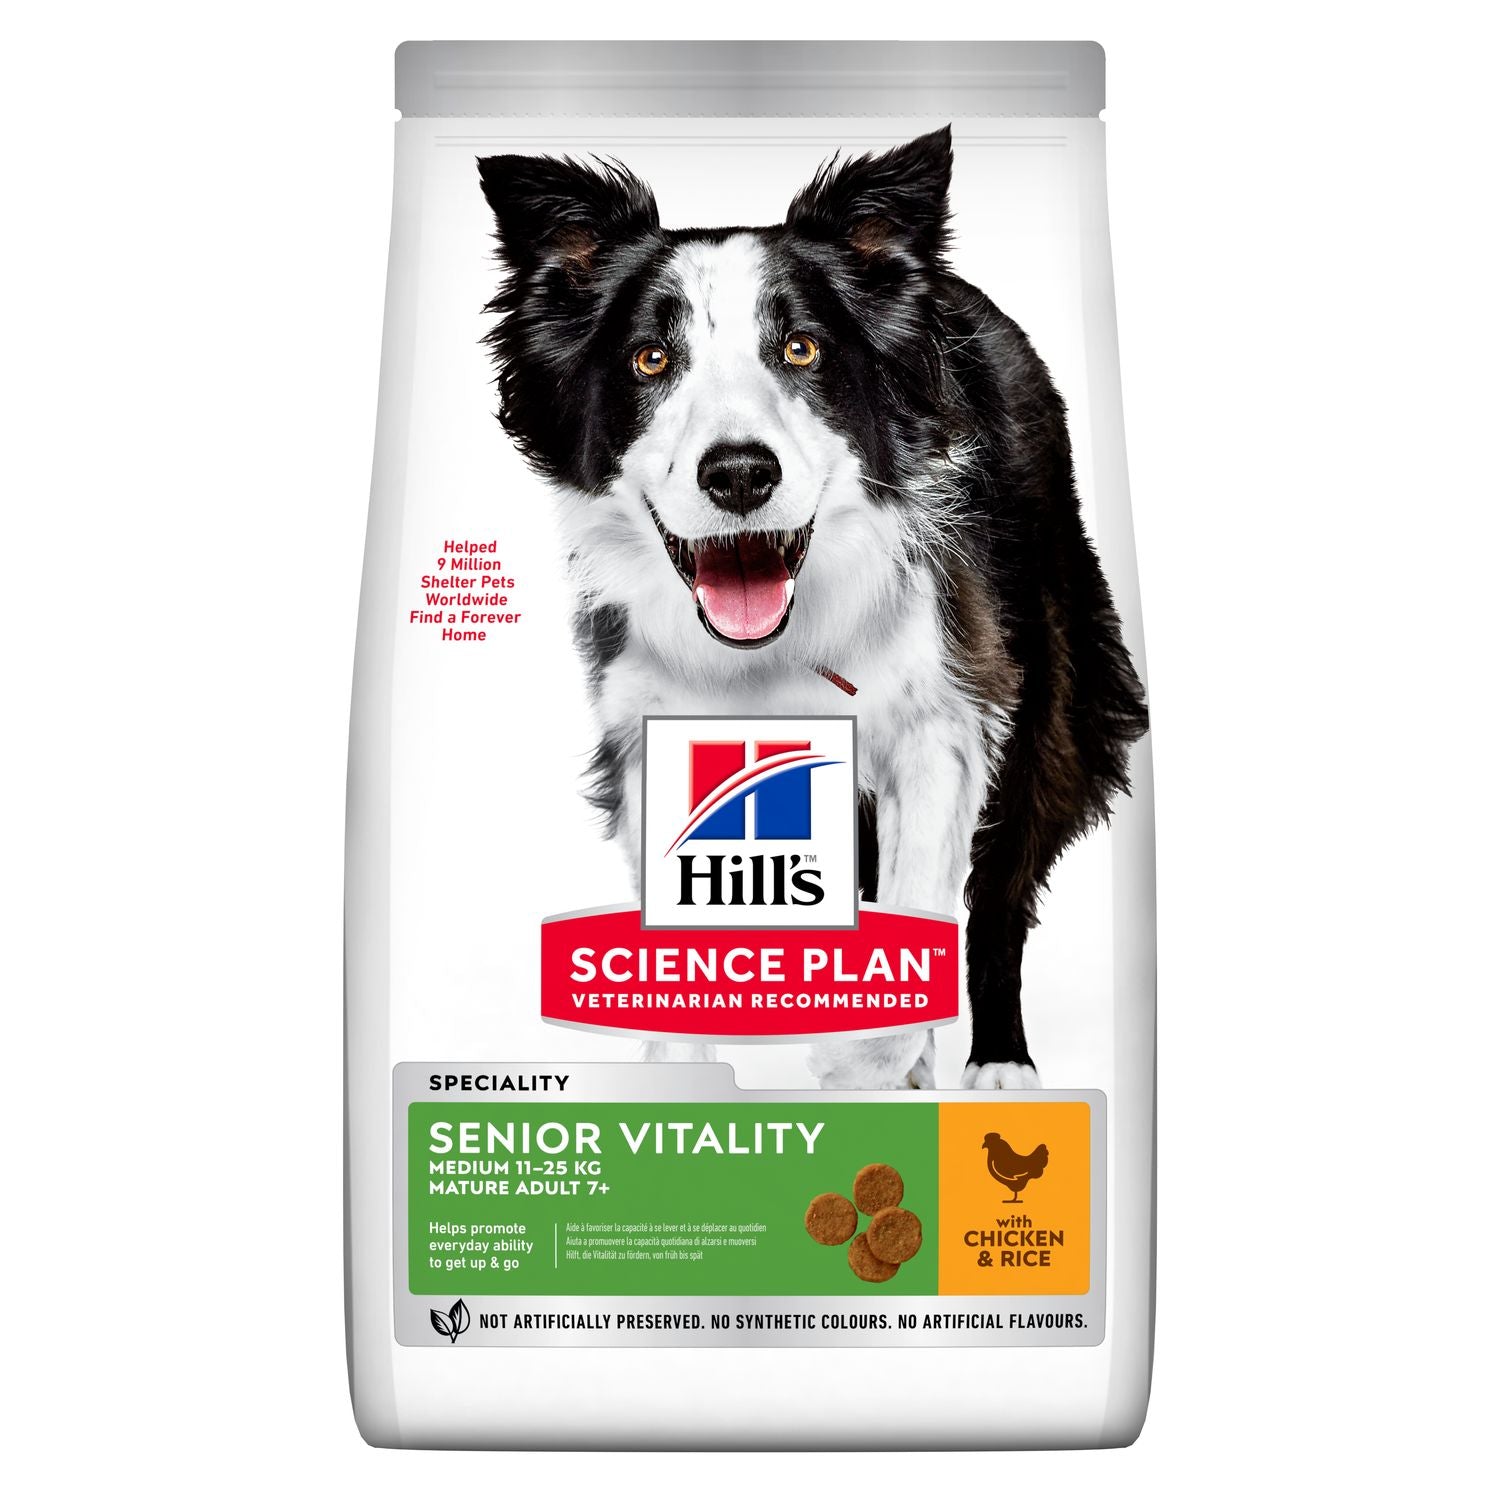 Hill's Science Plan Senior Vitality Medium Mature Adult 7+ Dog Food with Chicken & Rice